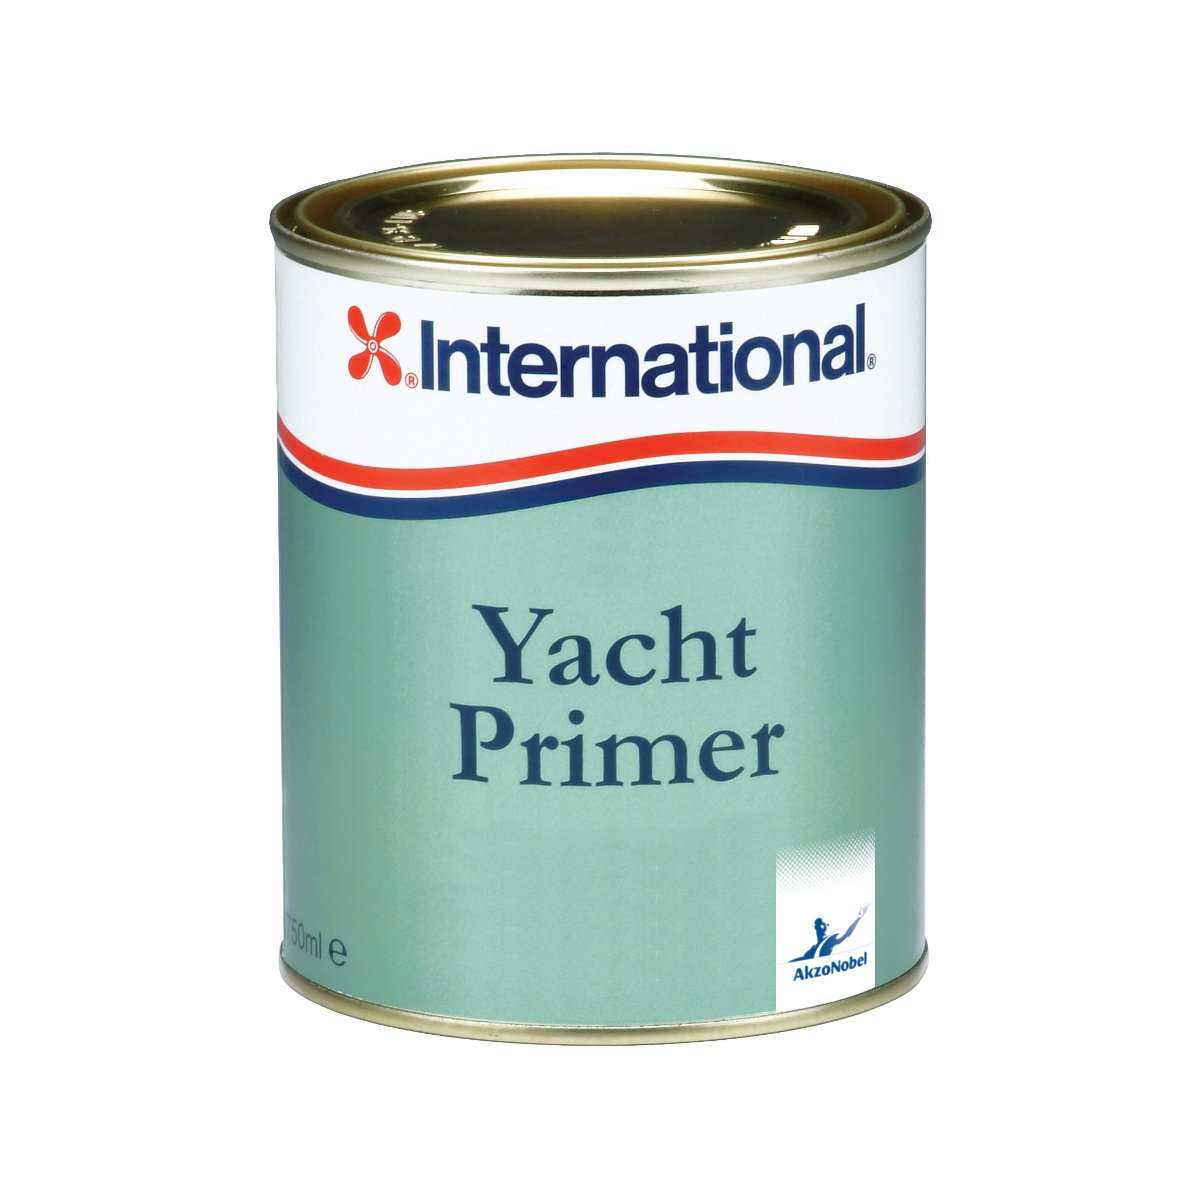 International Yacht Primer primaire - gris 750ml